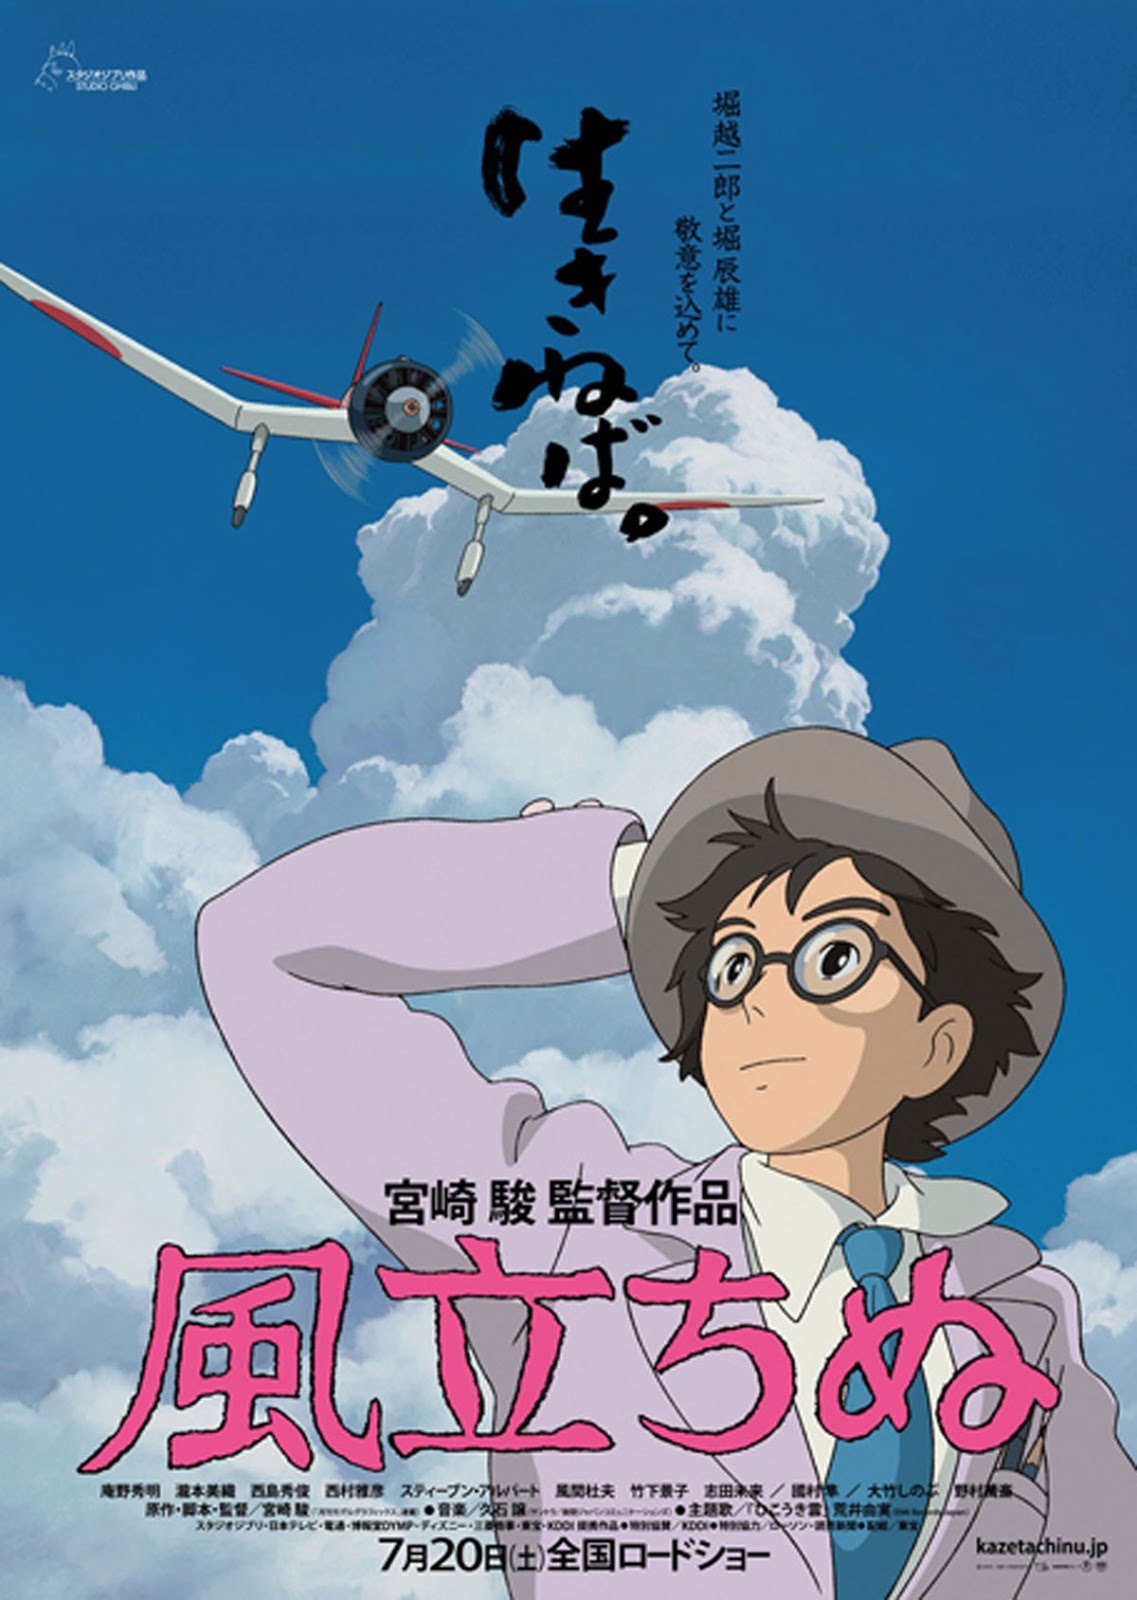 PennsylvAsia Studio Ghibli Fest 2020 brings six Ghibli films to